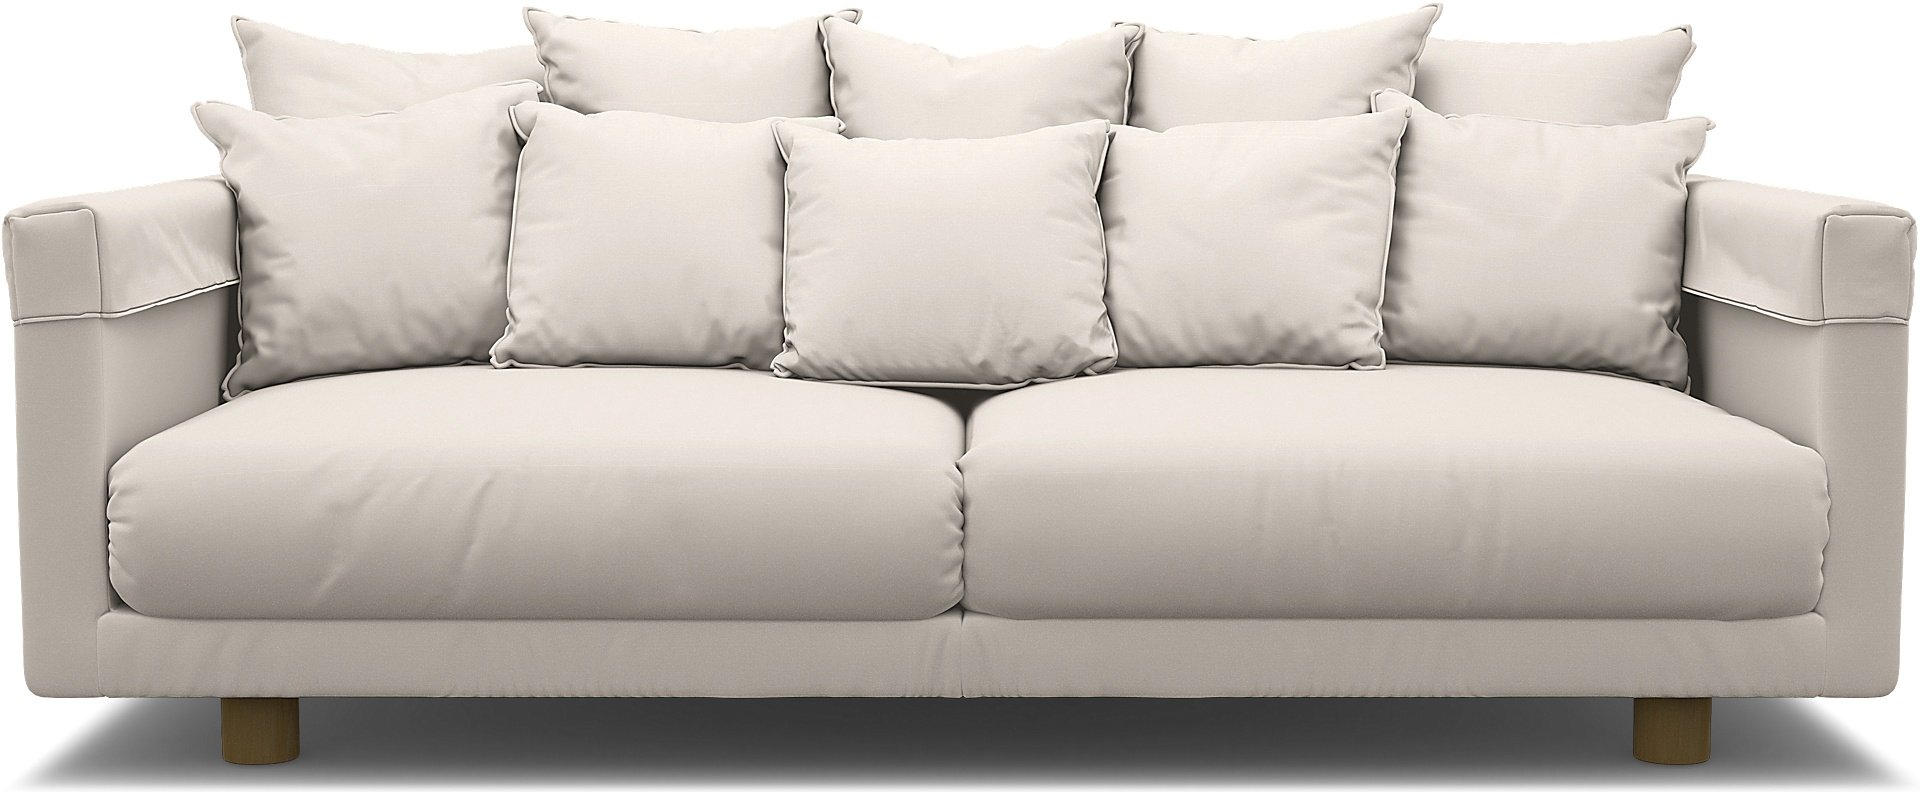 IKEA - Stockholm 2017 3 Seater Sofa Cover, Soft White, Cotton - Bemz